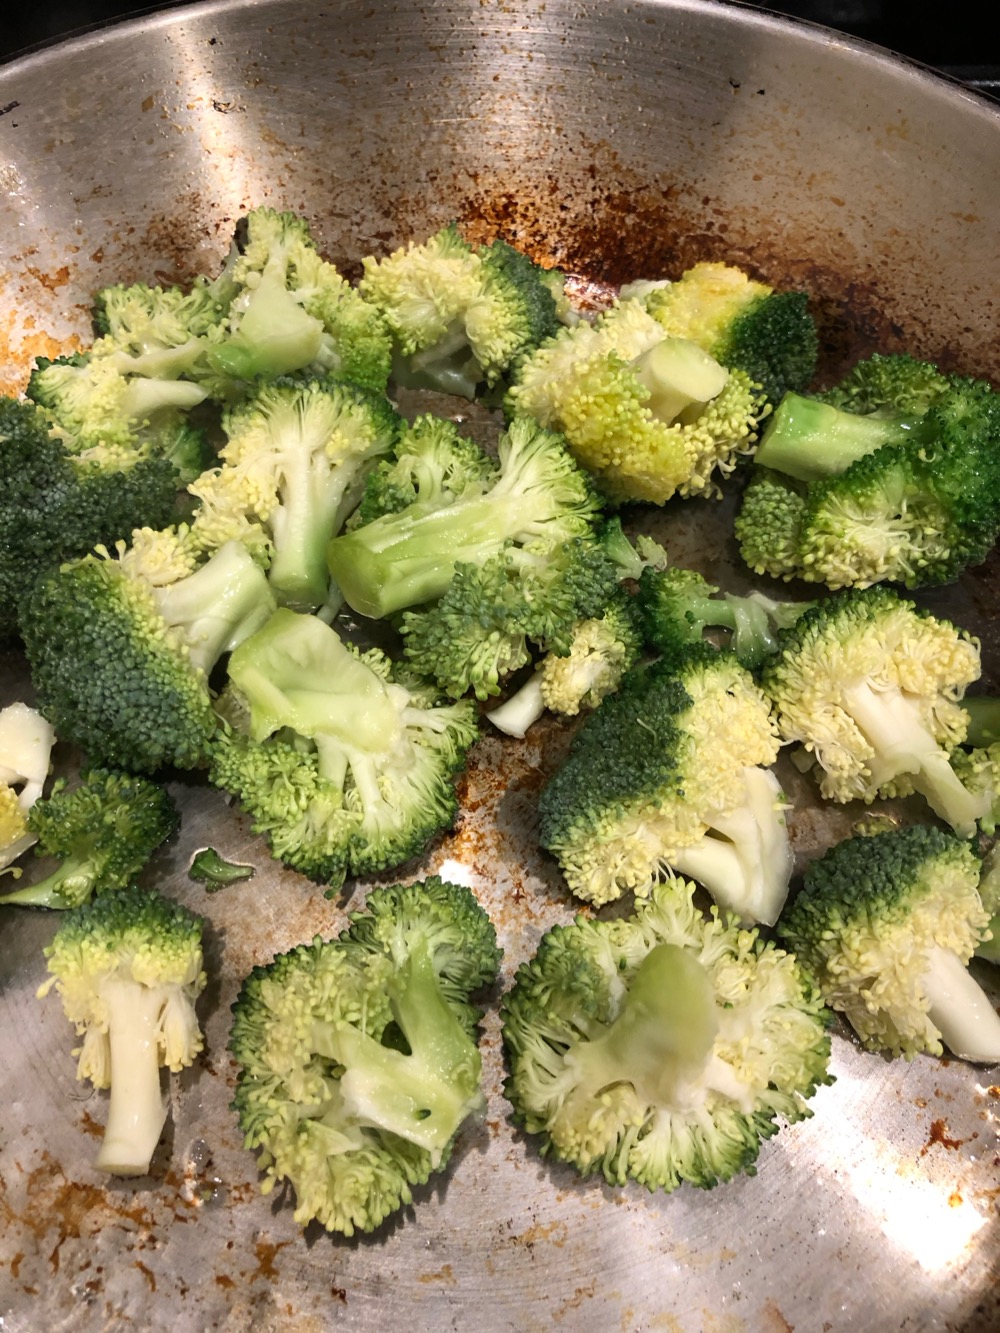 Char that broccoli!